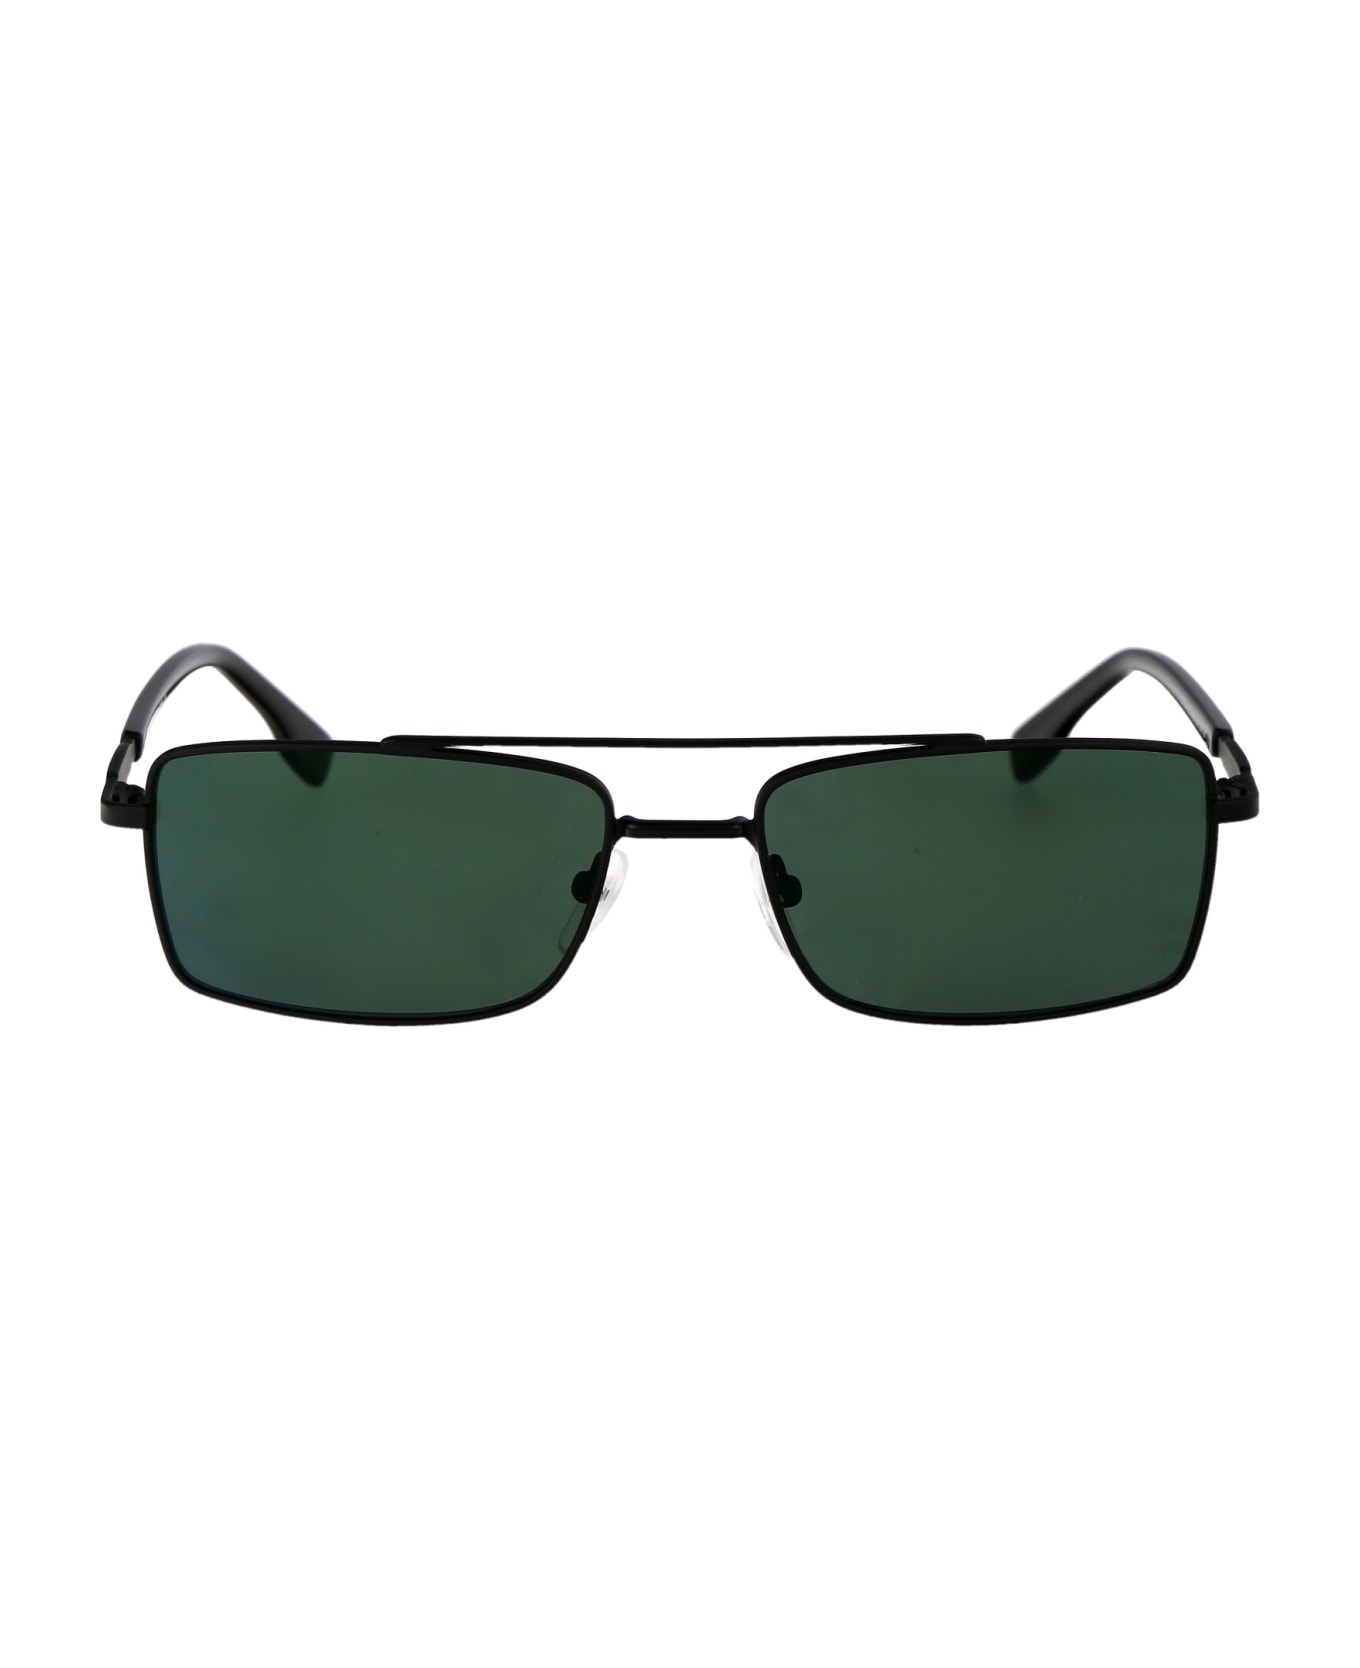 Karl Lagerfeld Kl348s Sunglasses - 002 BLACK サングラス